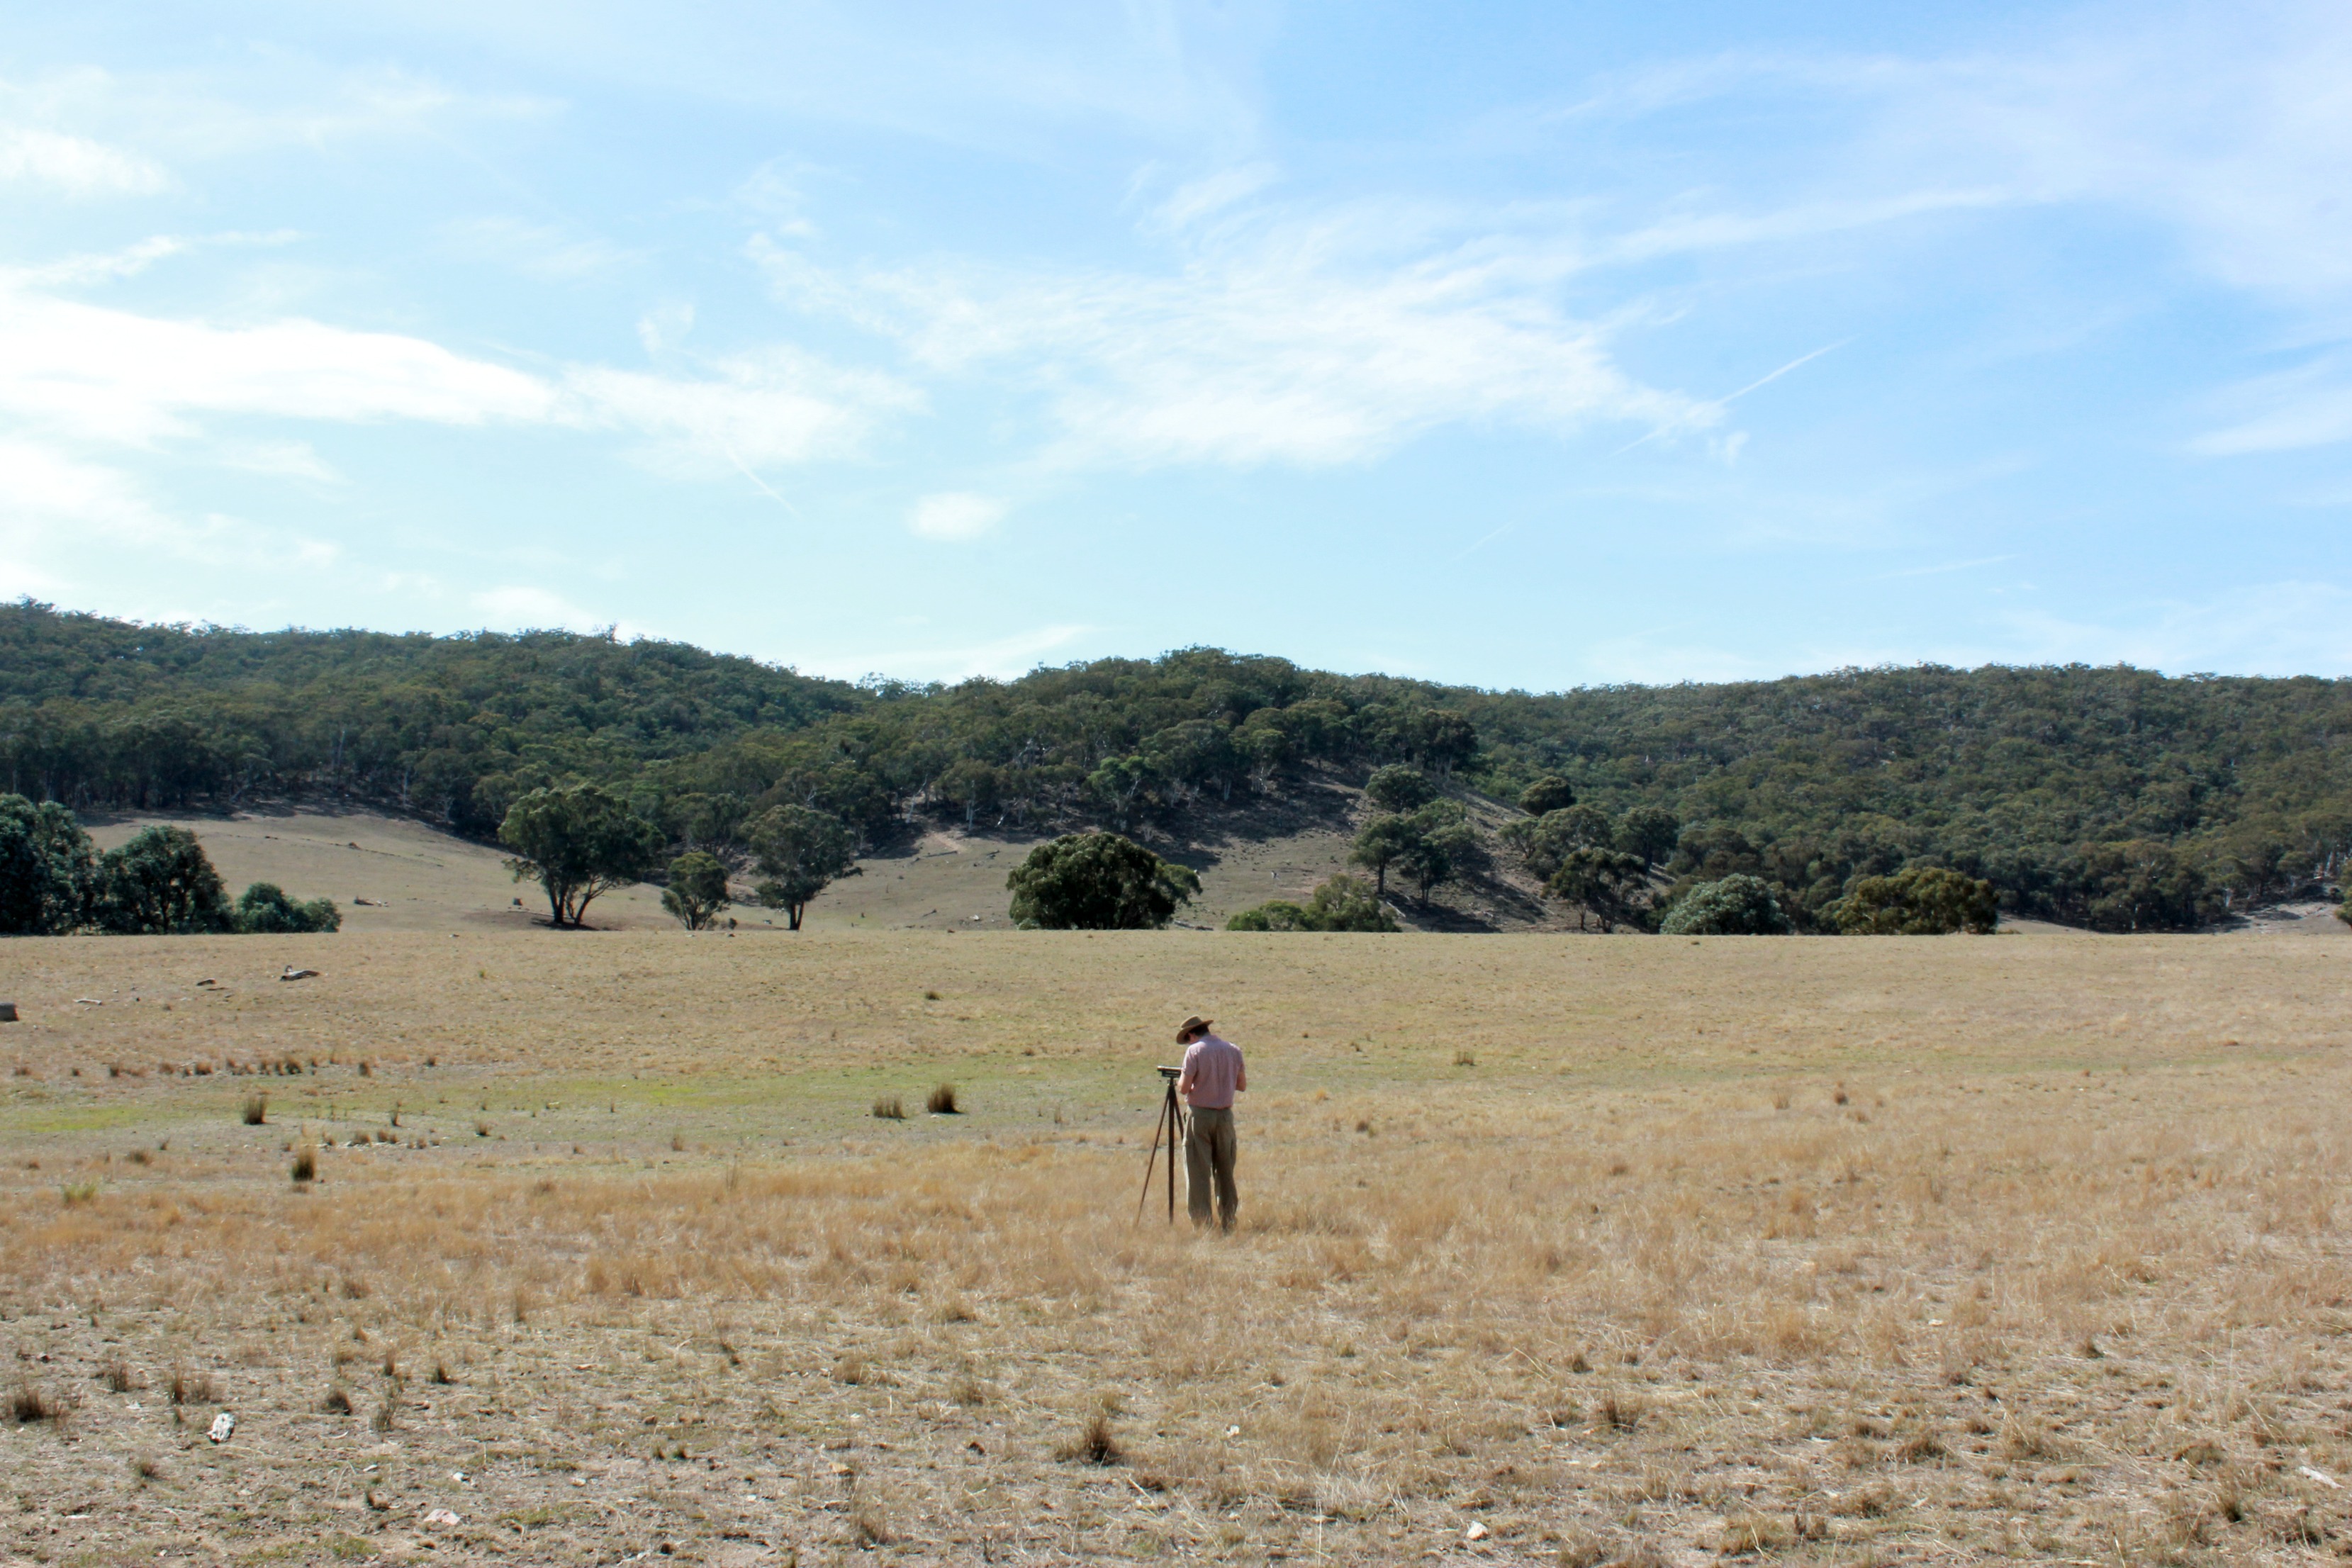 Actor Zackary Drury as The Rival in a field scene.